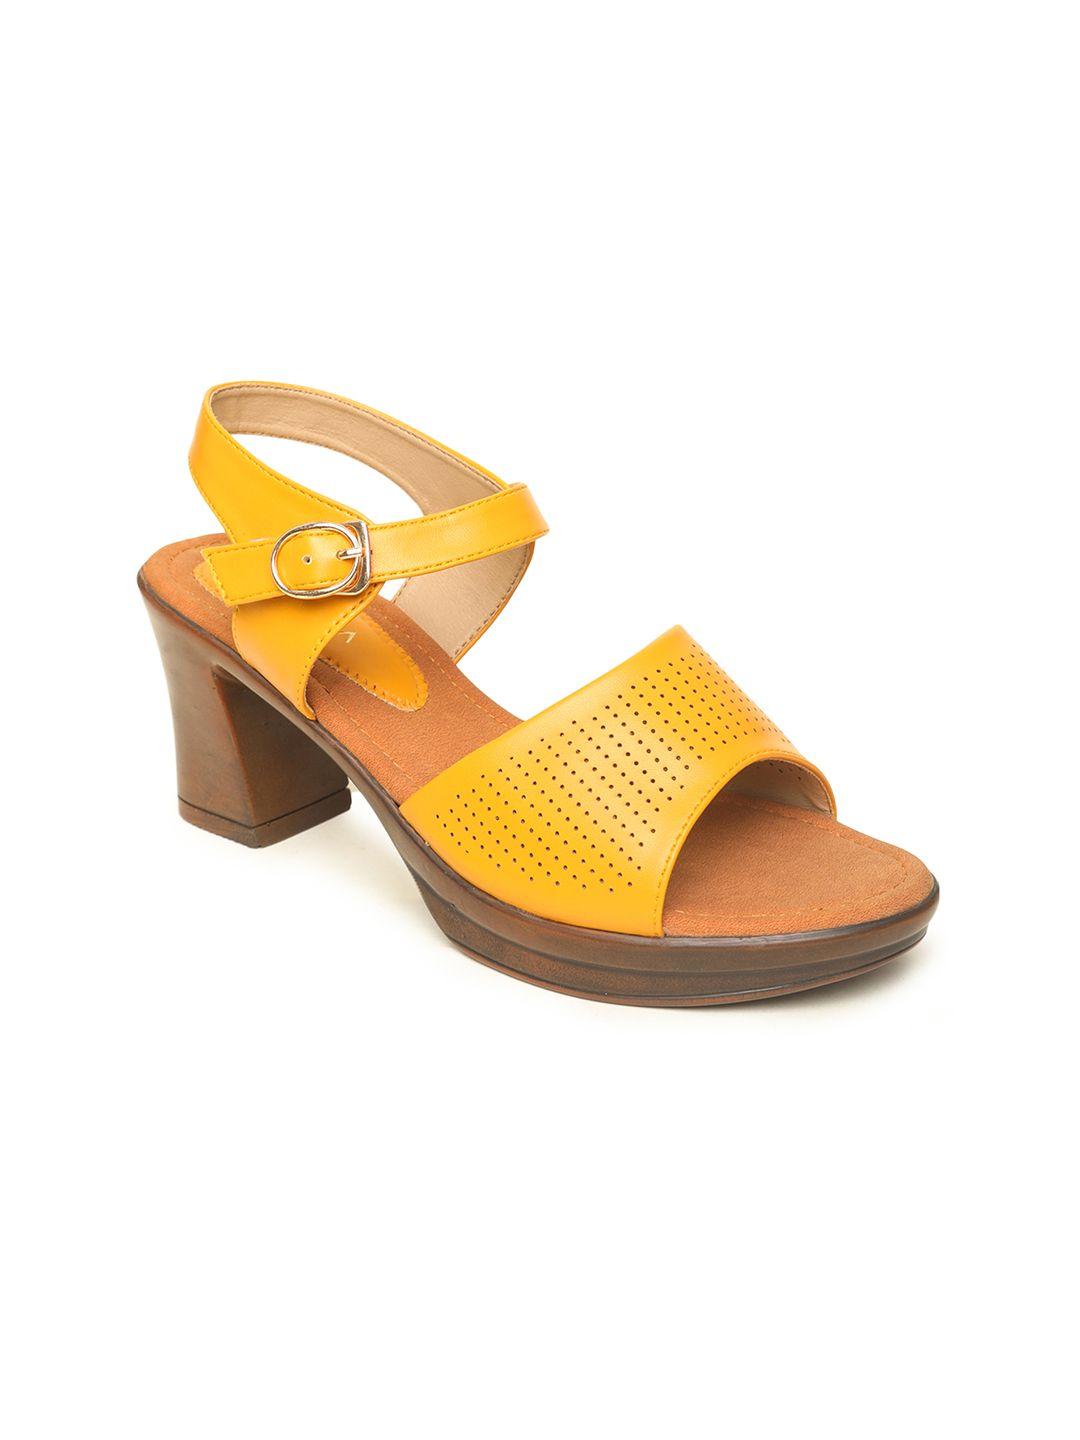 valiosaa mustard yellow block heels with laser cuts